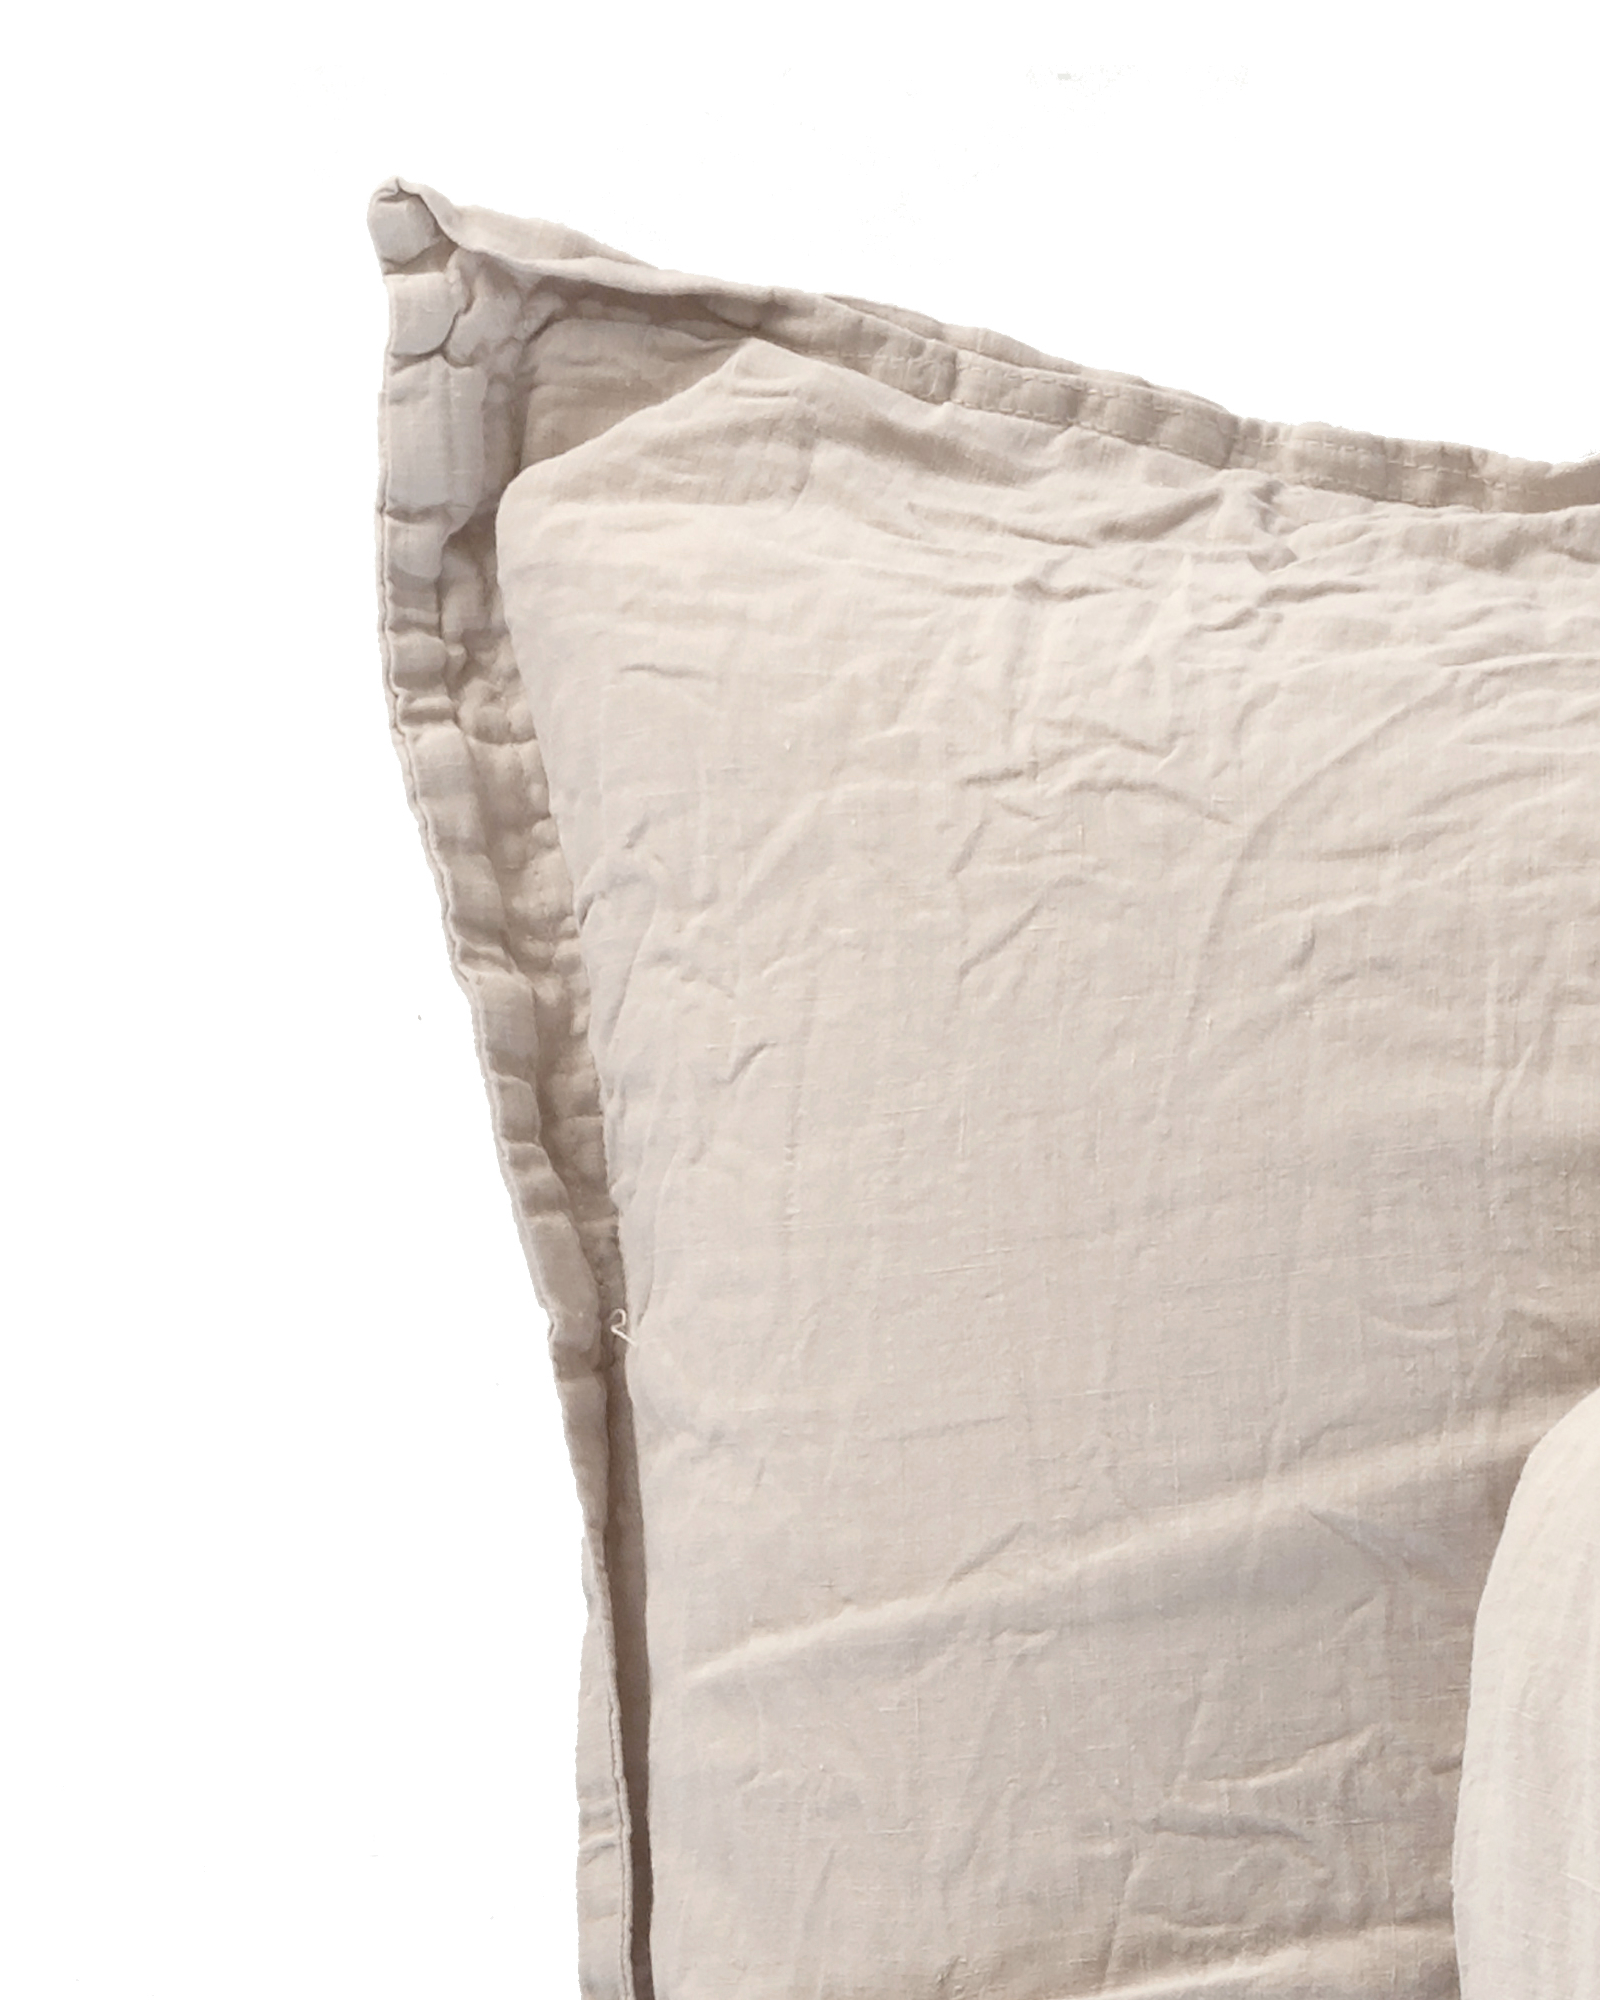 MARIE-MARIE - Pillowcase LINEN STORIES Sand - 50x75 cm - Sand